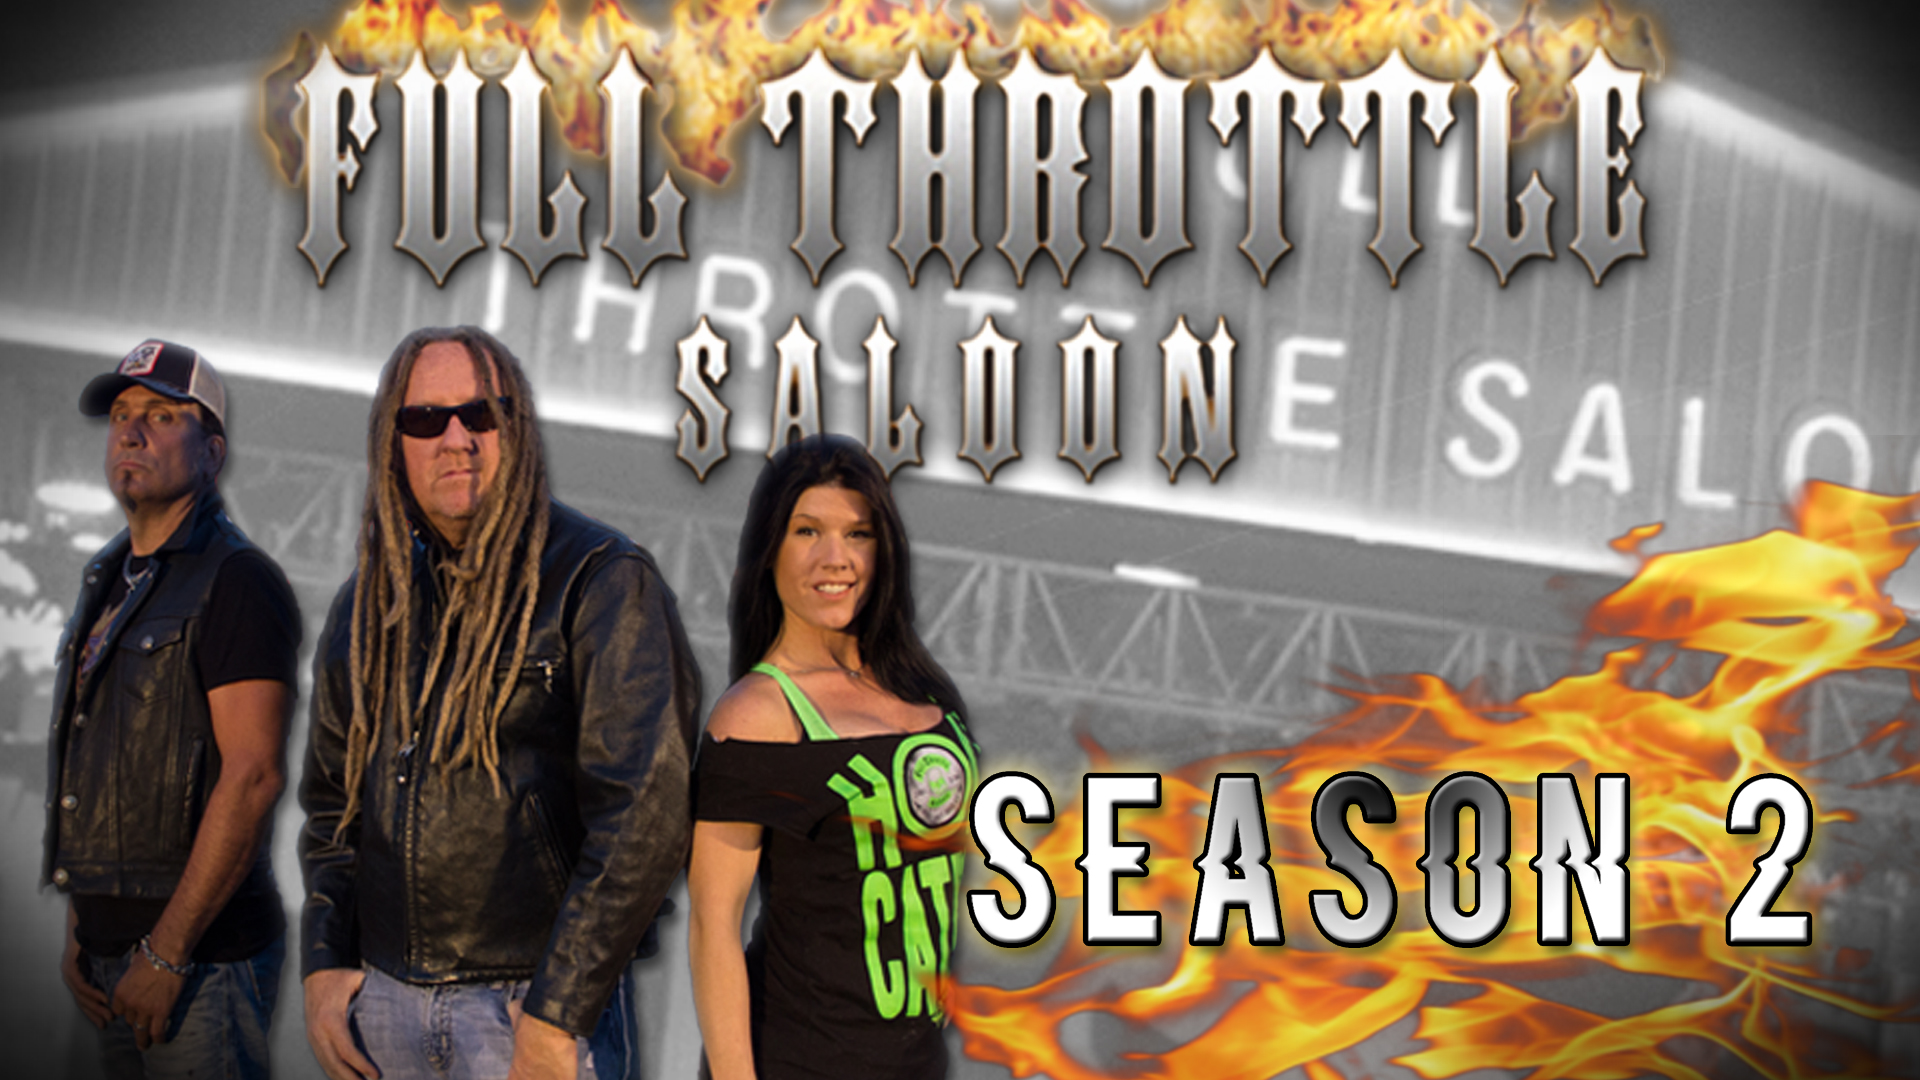 download full throttle saloon website